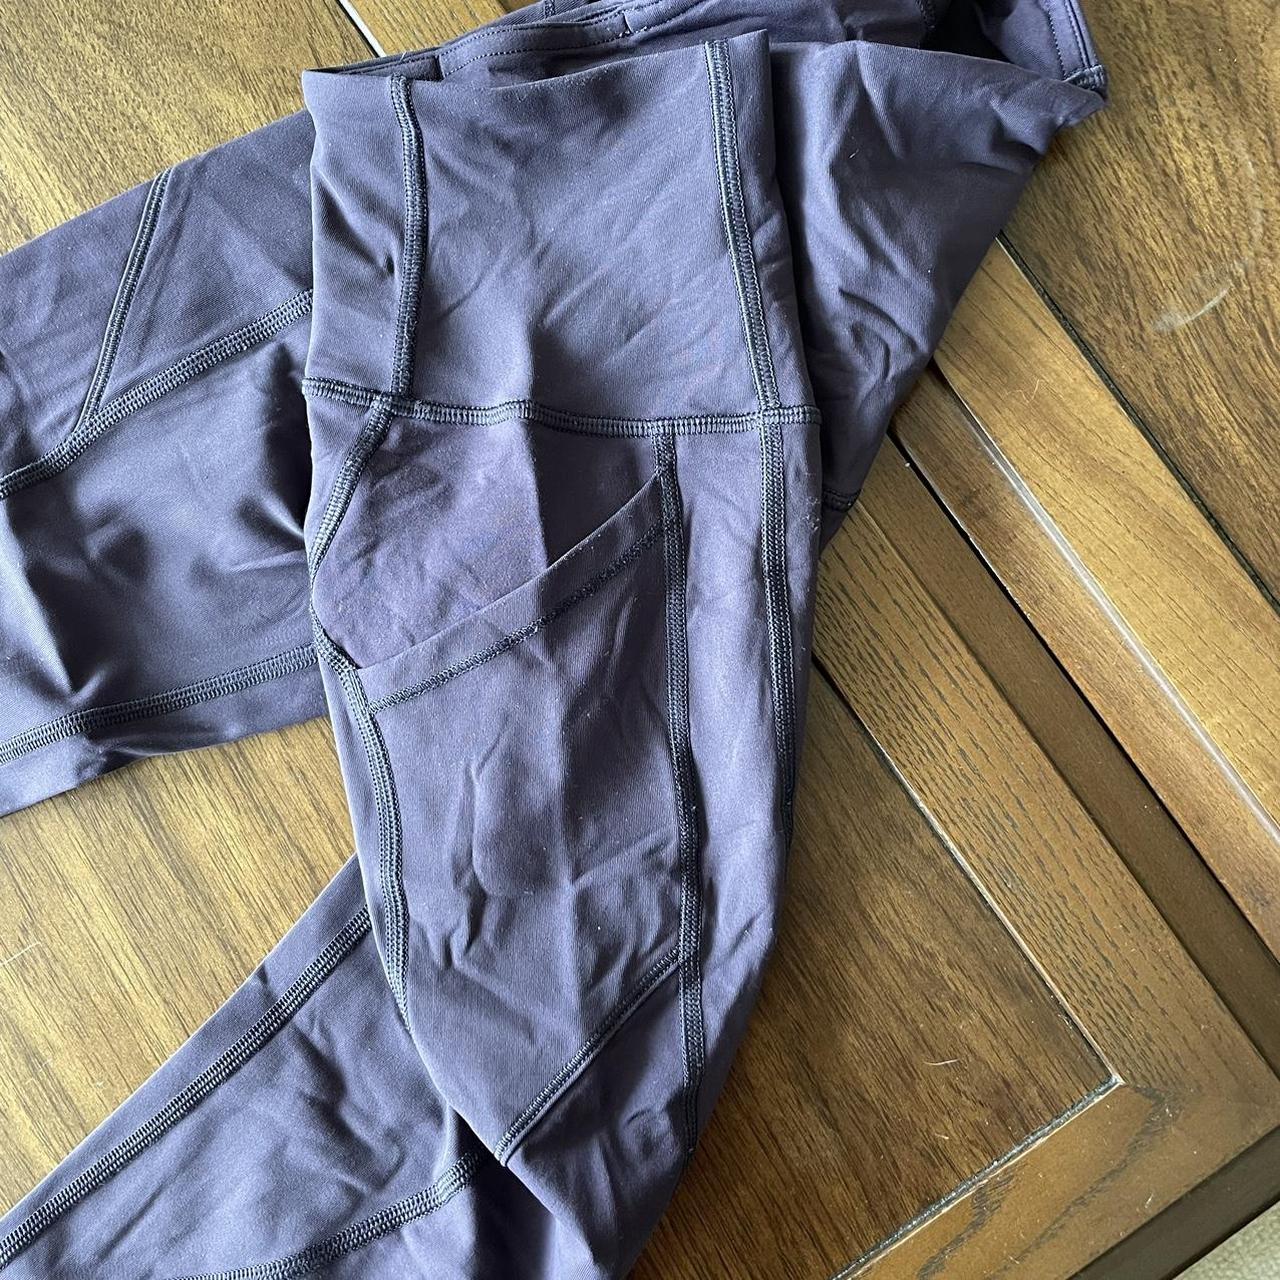 Lululemon dark purple leggings with pockets. Size 4.